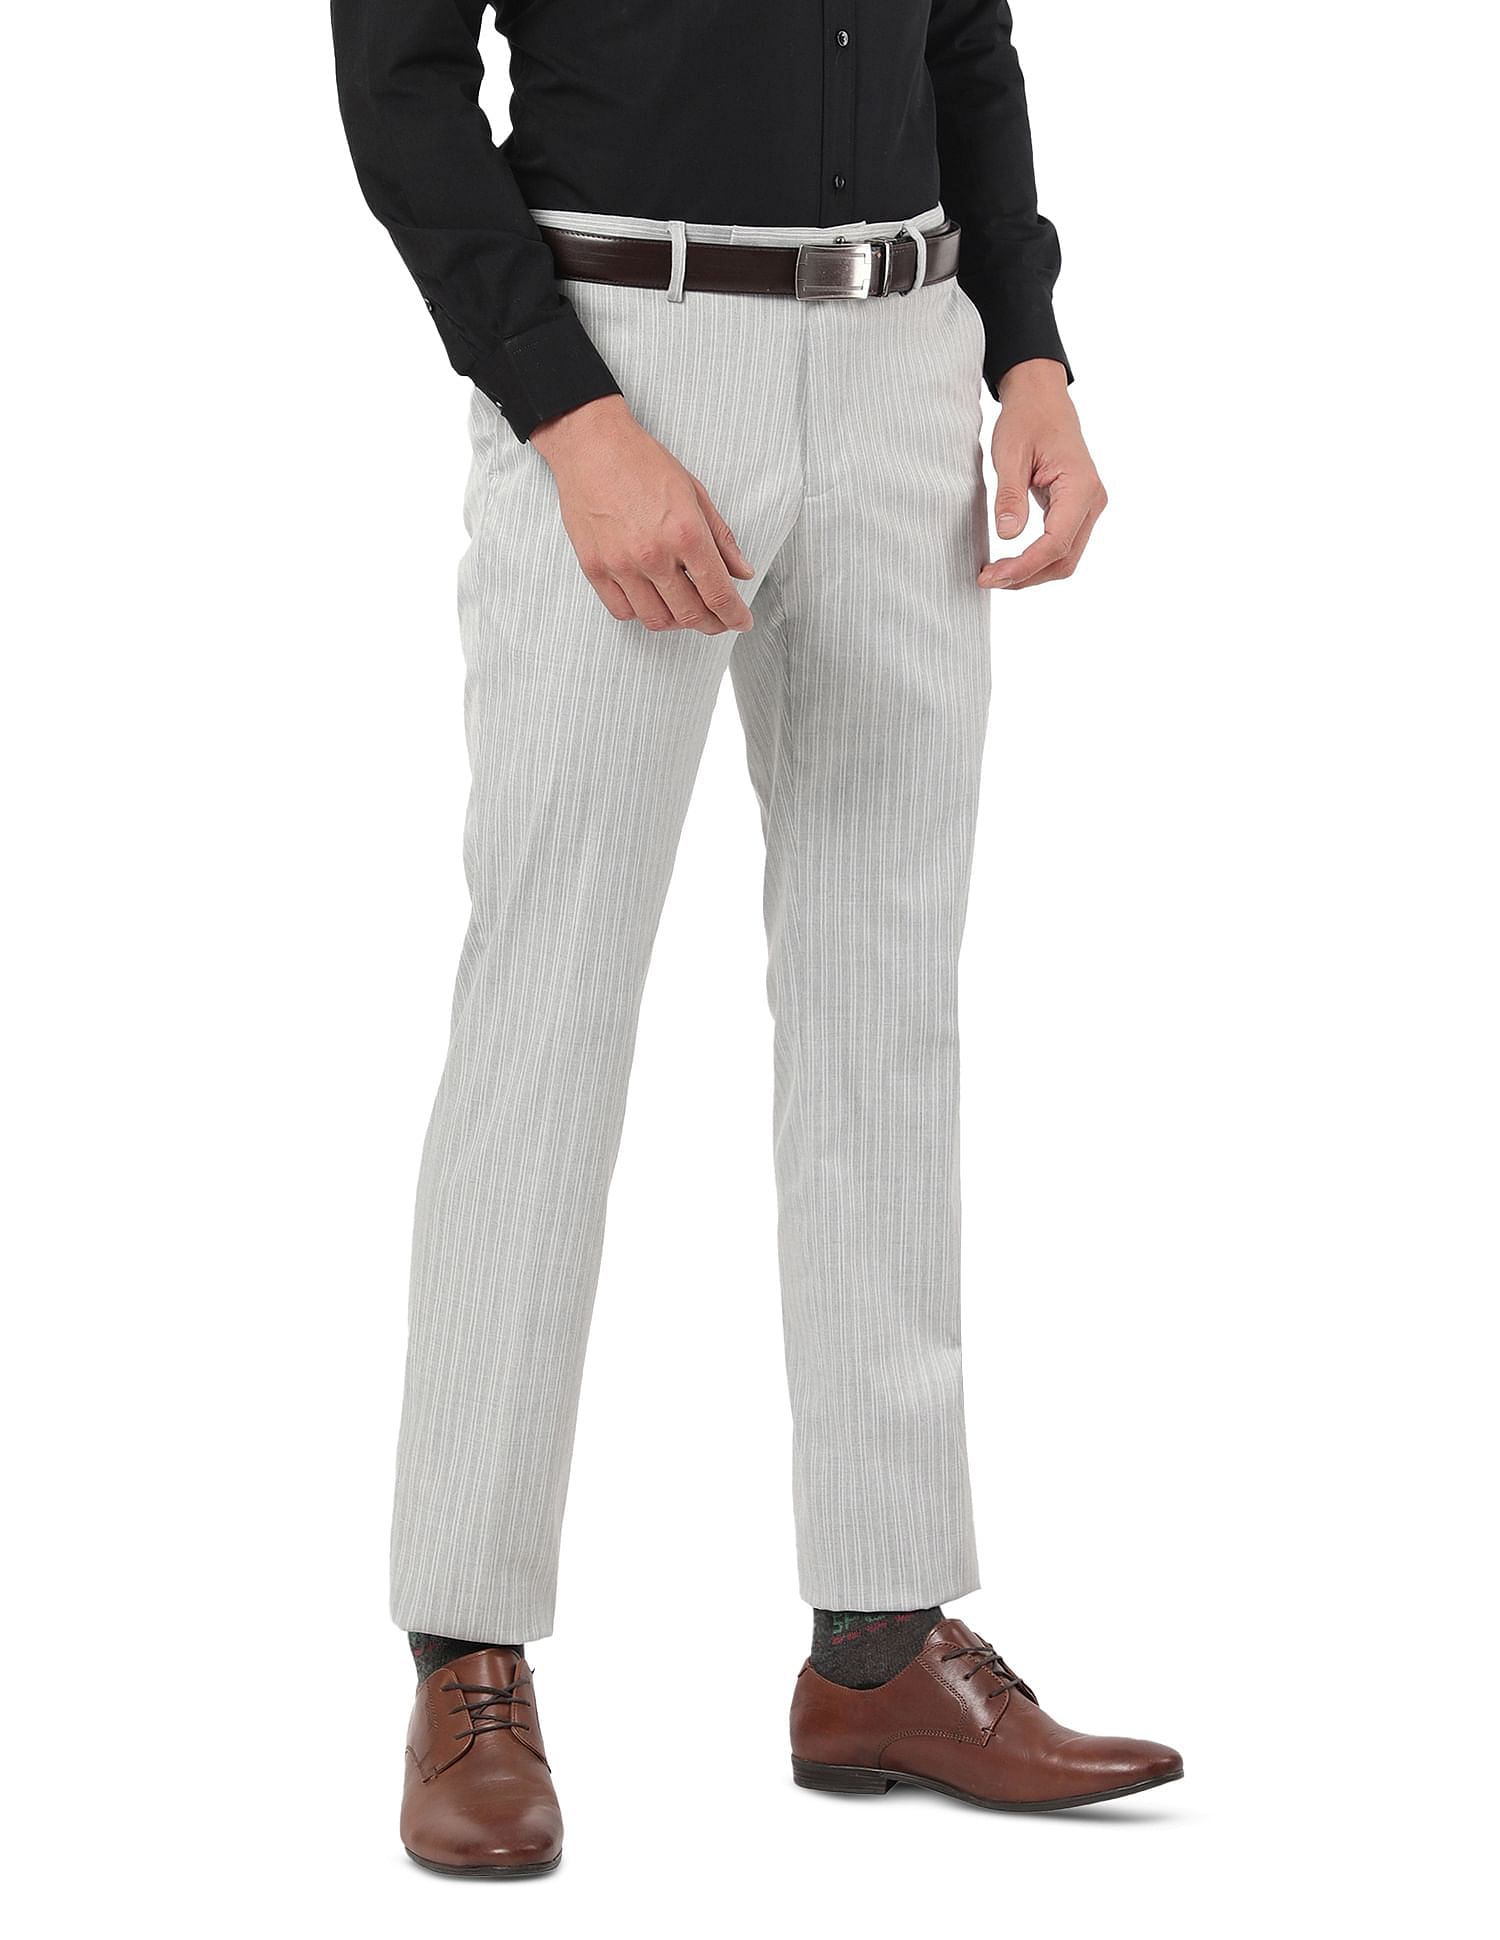 Buy Men Beige Textured Slim Fit Formal Trousers Online  760058  Peter  England